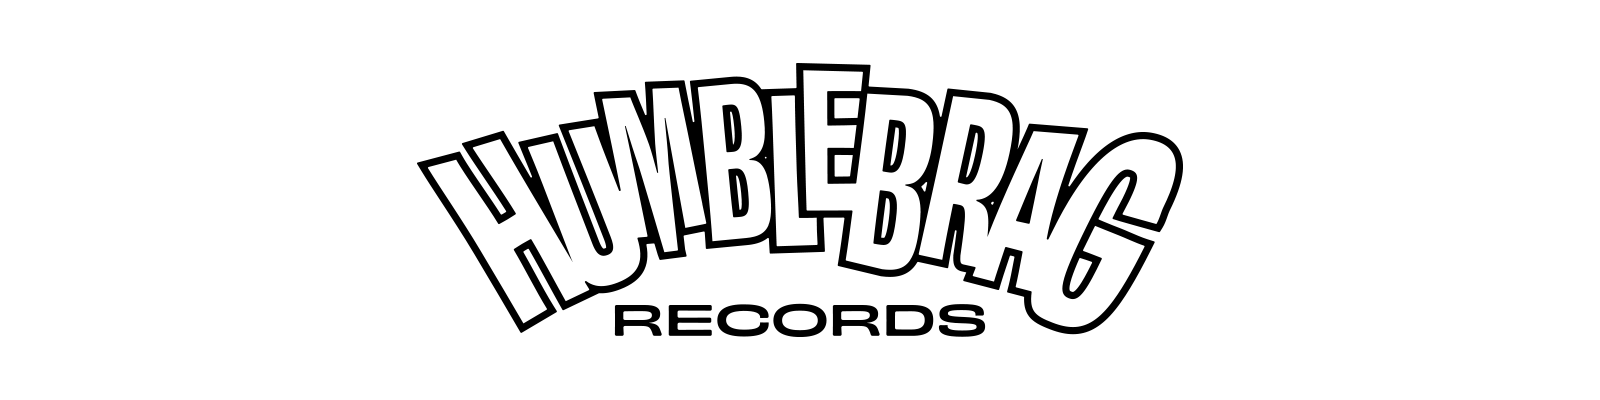 Humblebrag Records